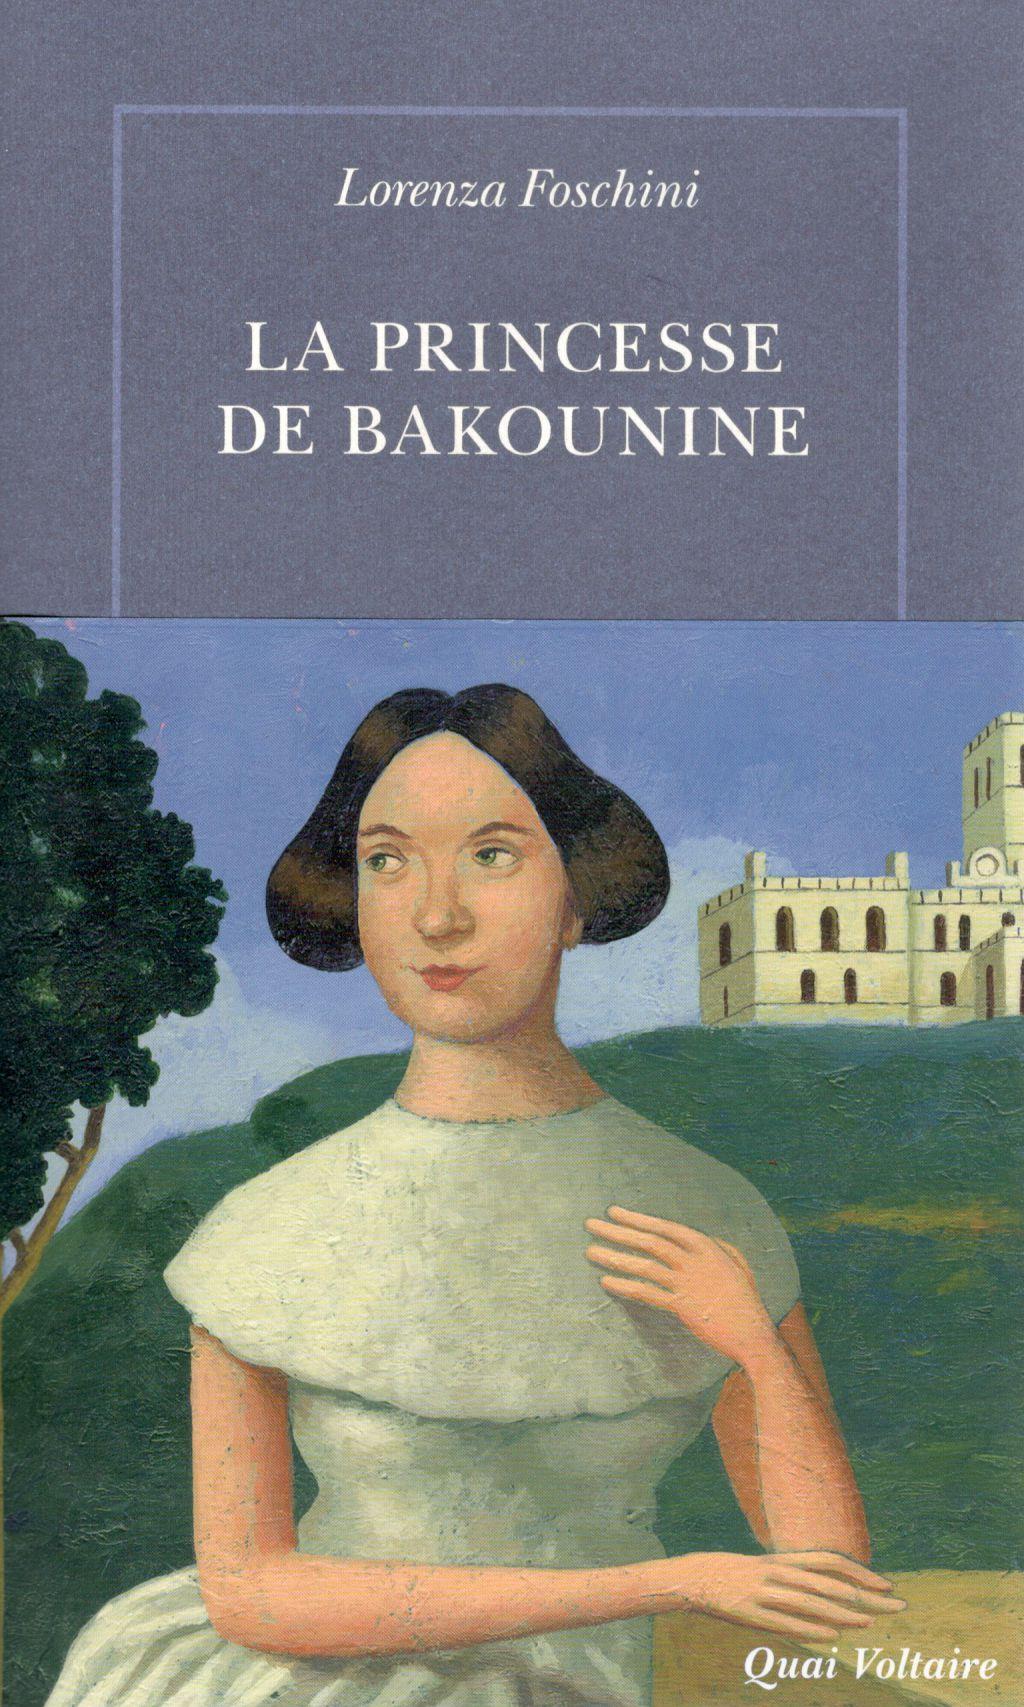 La princesse de Bakounine